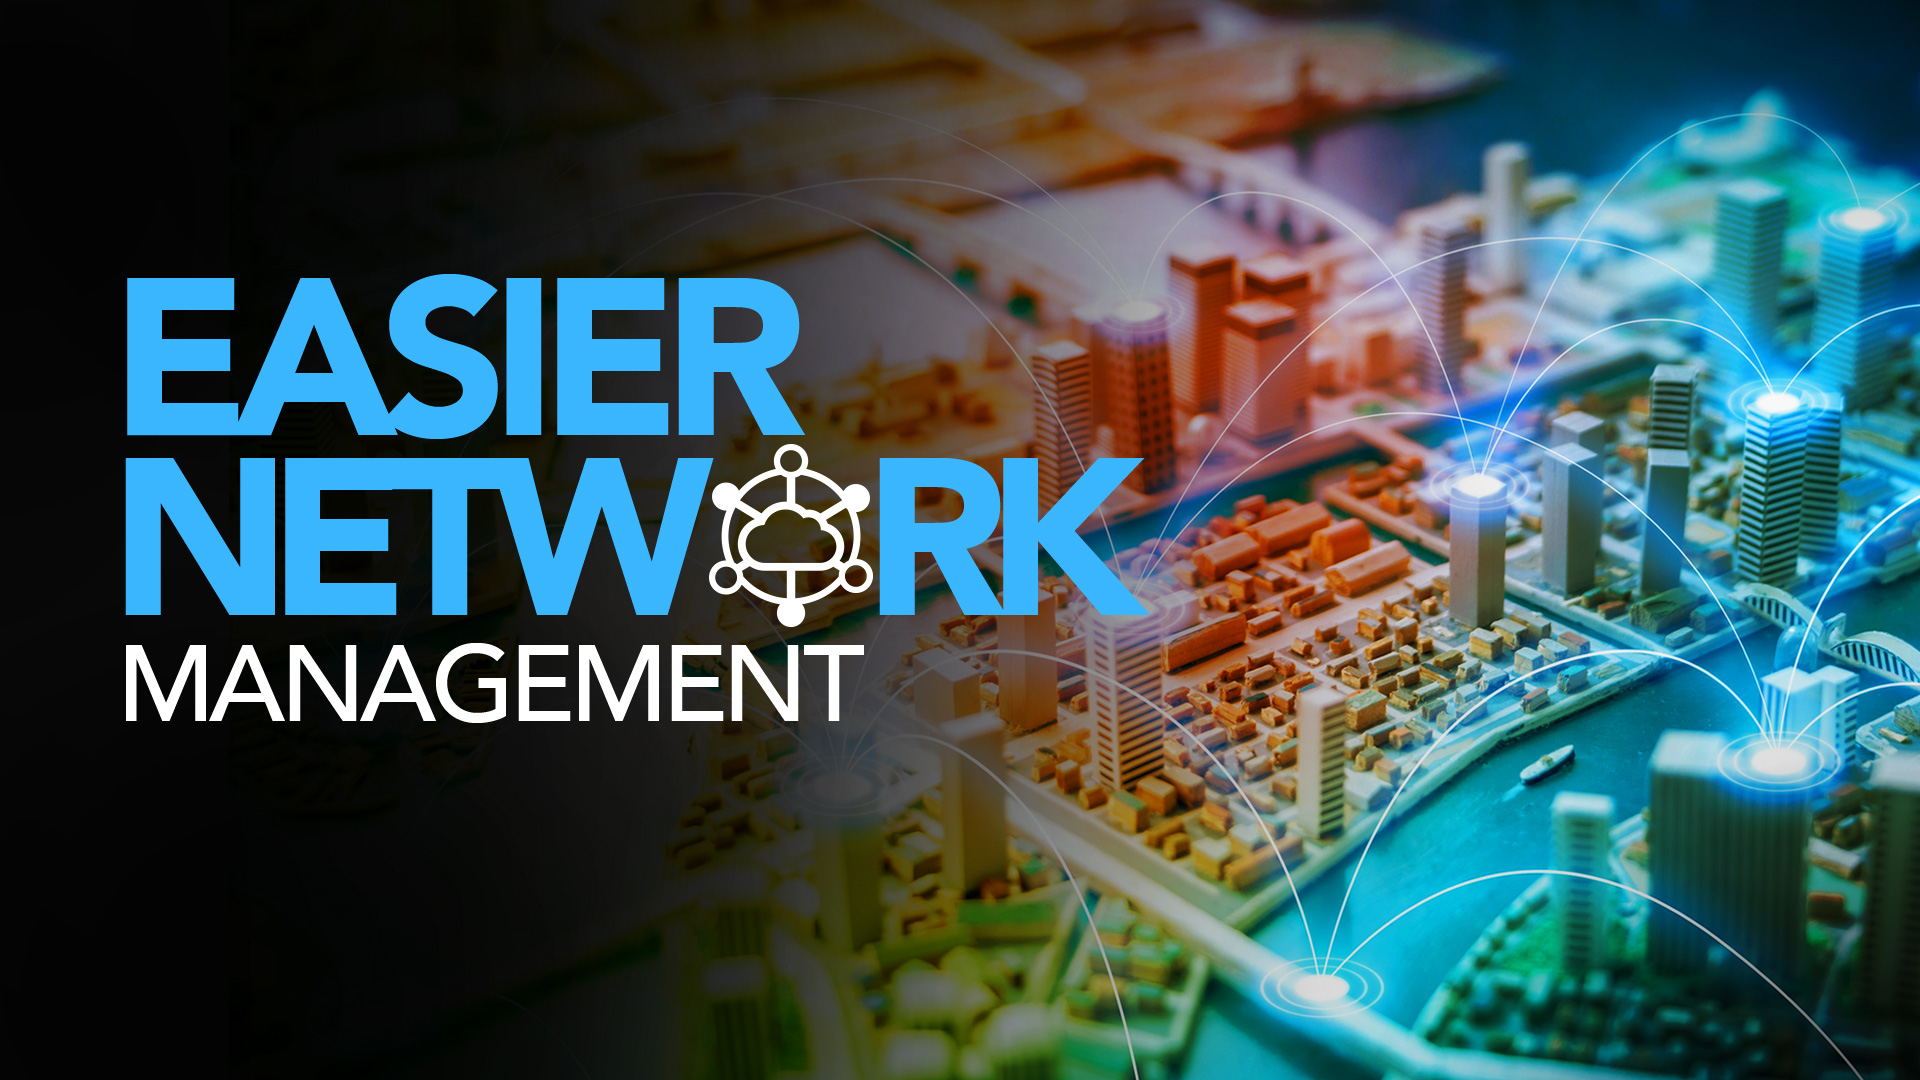 SD-WAN: Network Management Made Easier & Cheaper